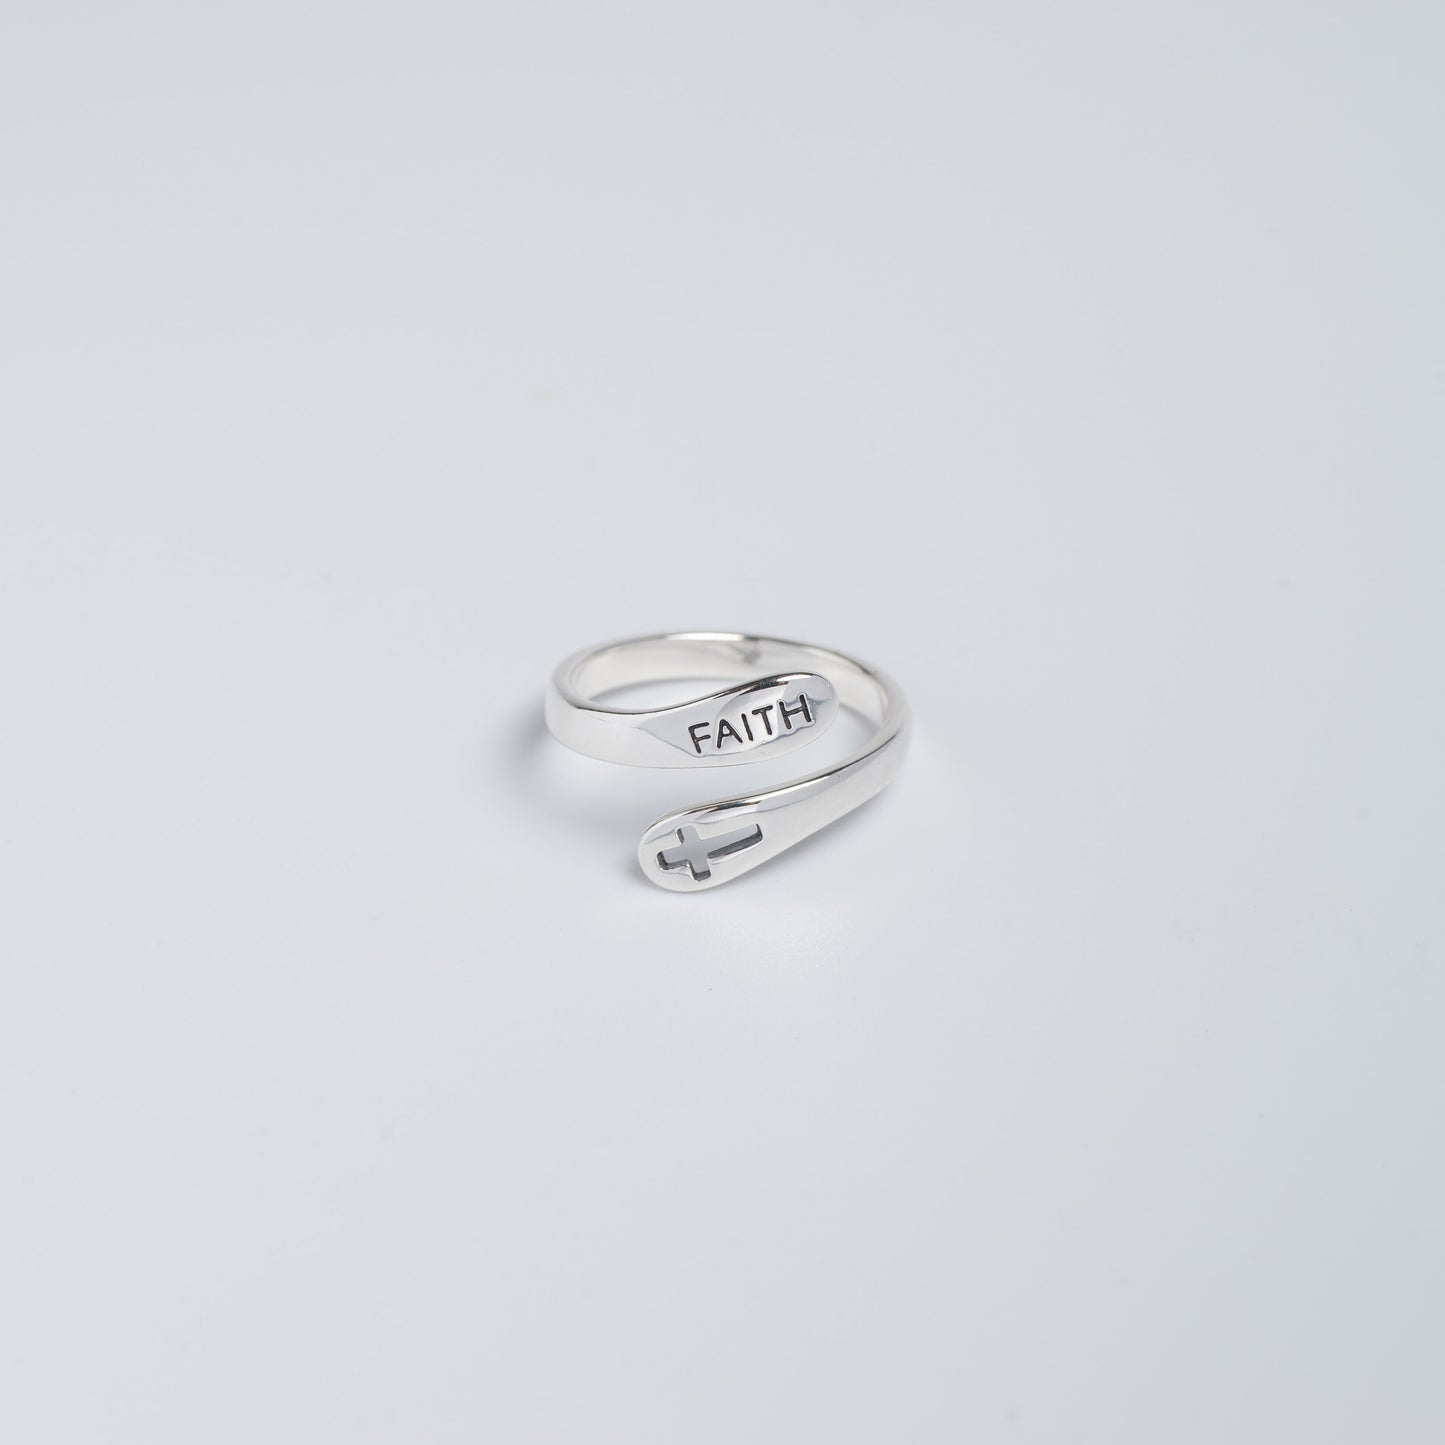 Monora Goth *Faith* Ring in 925 Silver